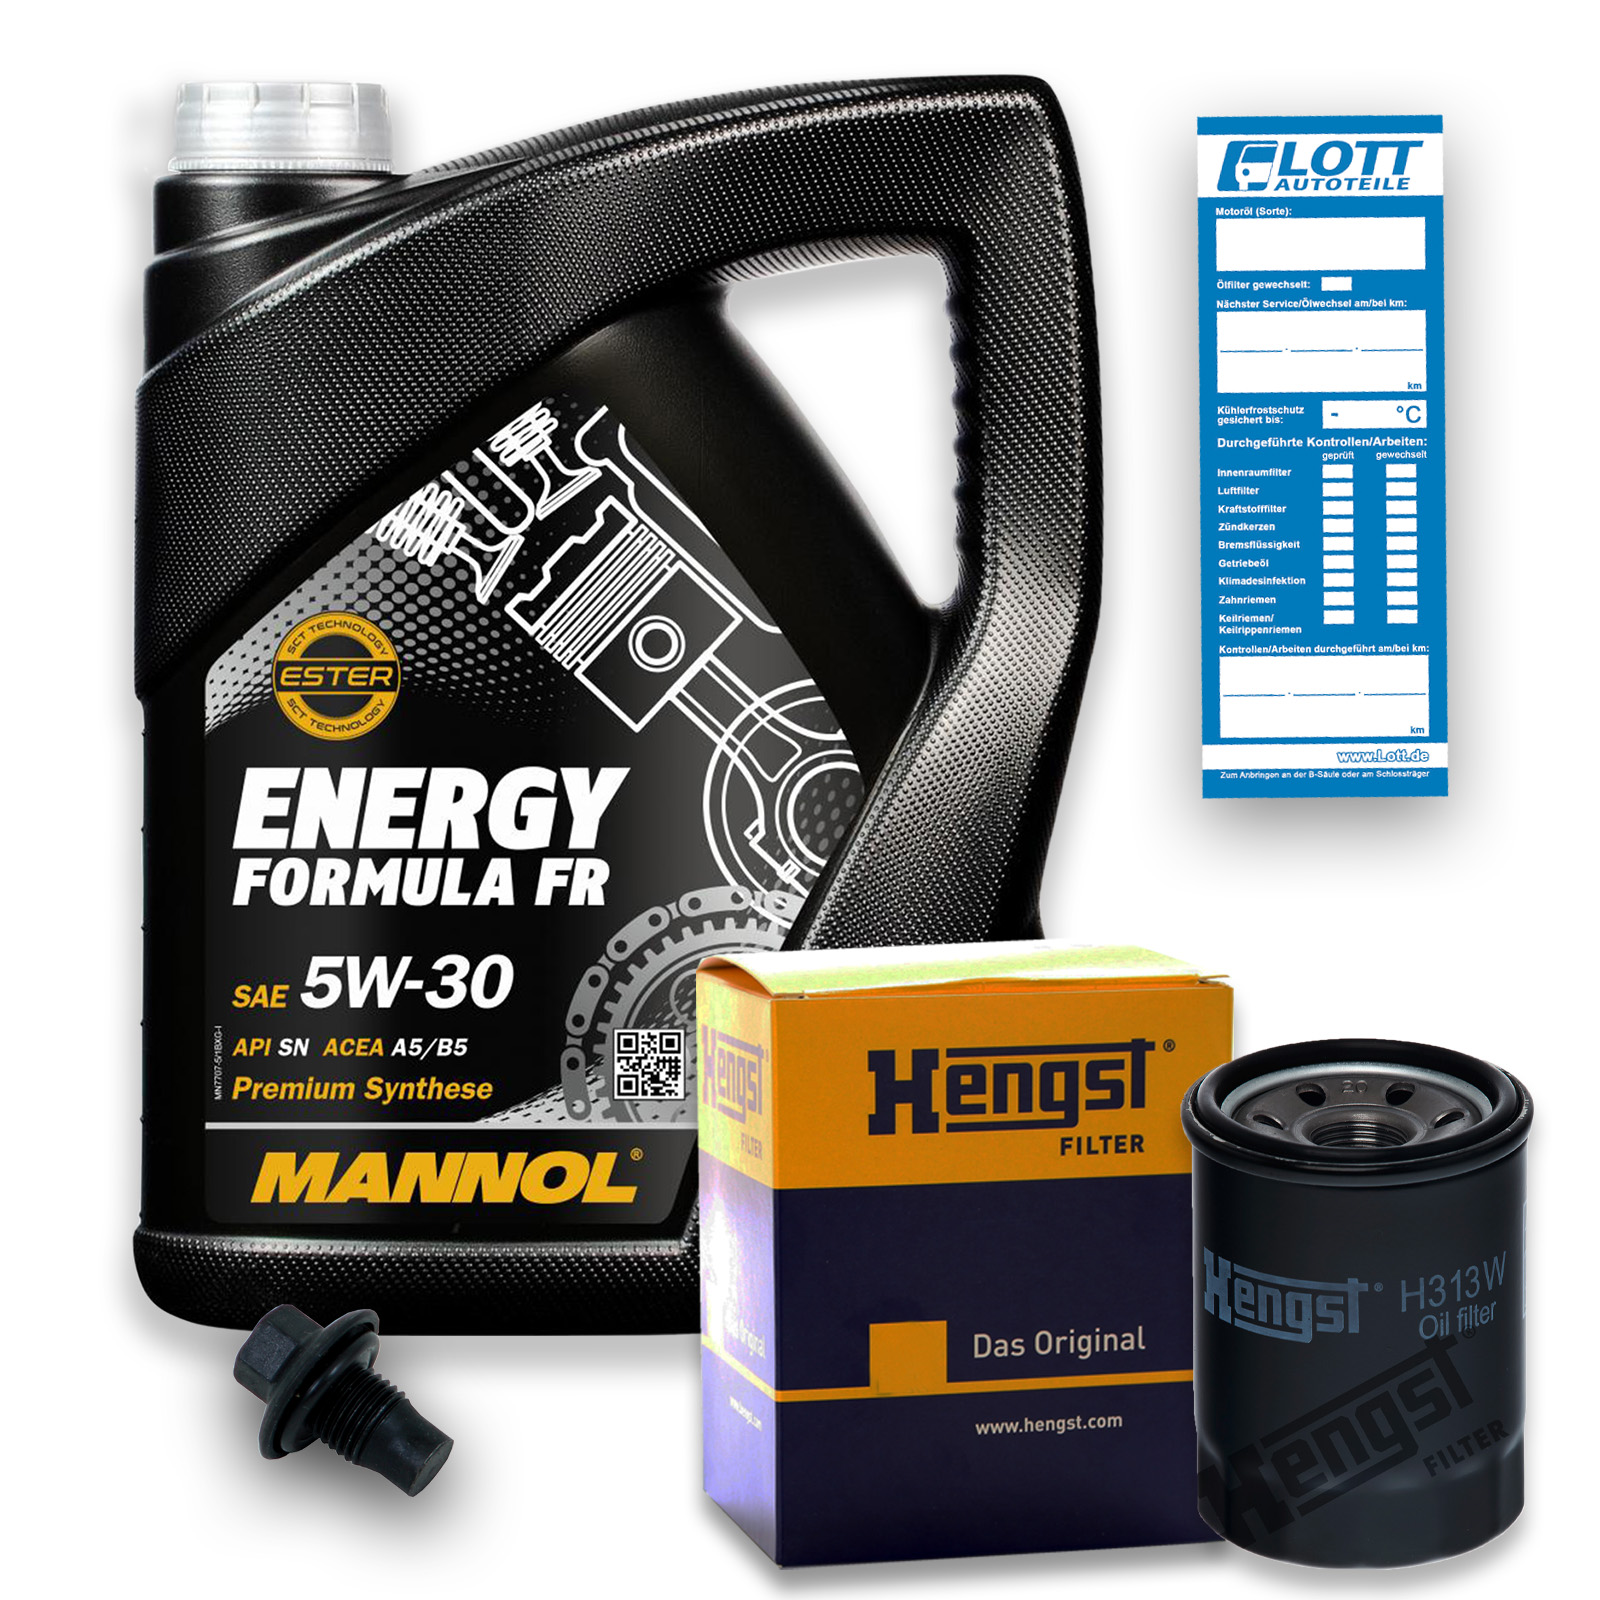 Mannol Inspektionskit Motoröl + HENGST Ölfilter + Ablassschraube